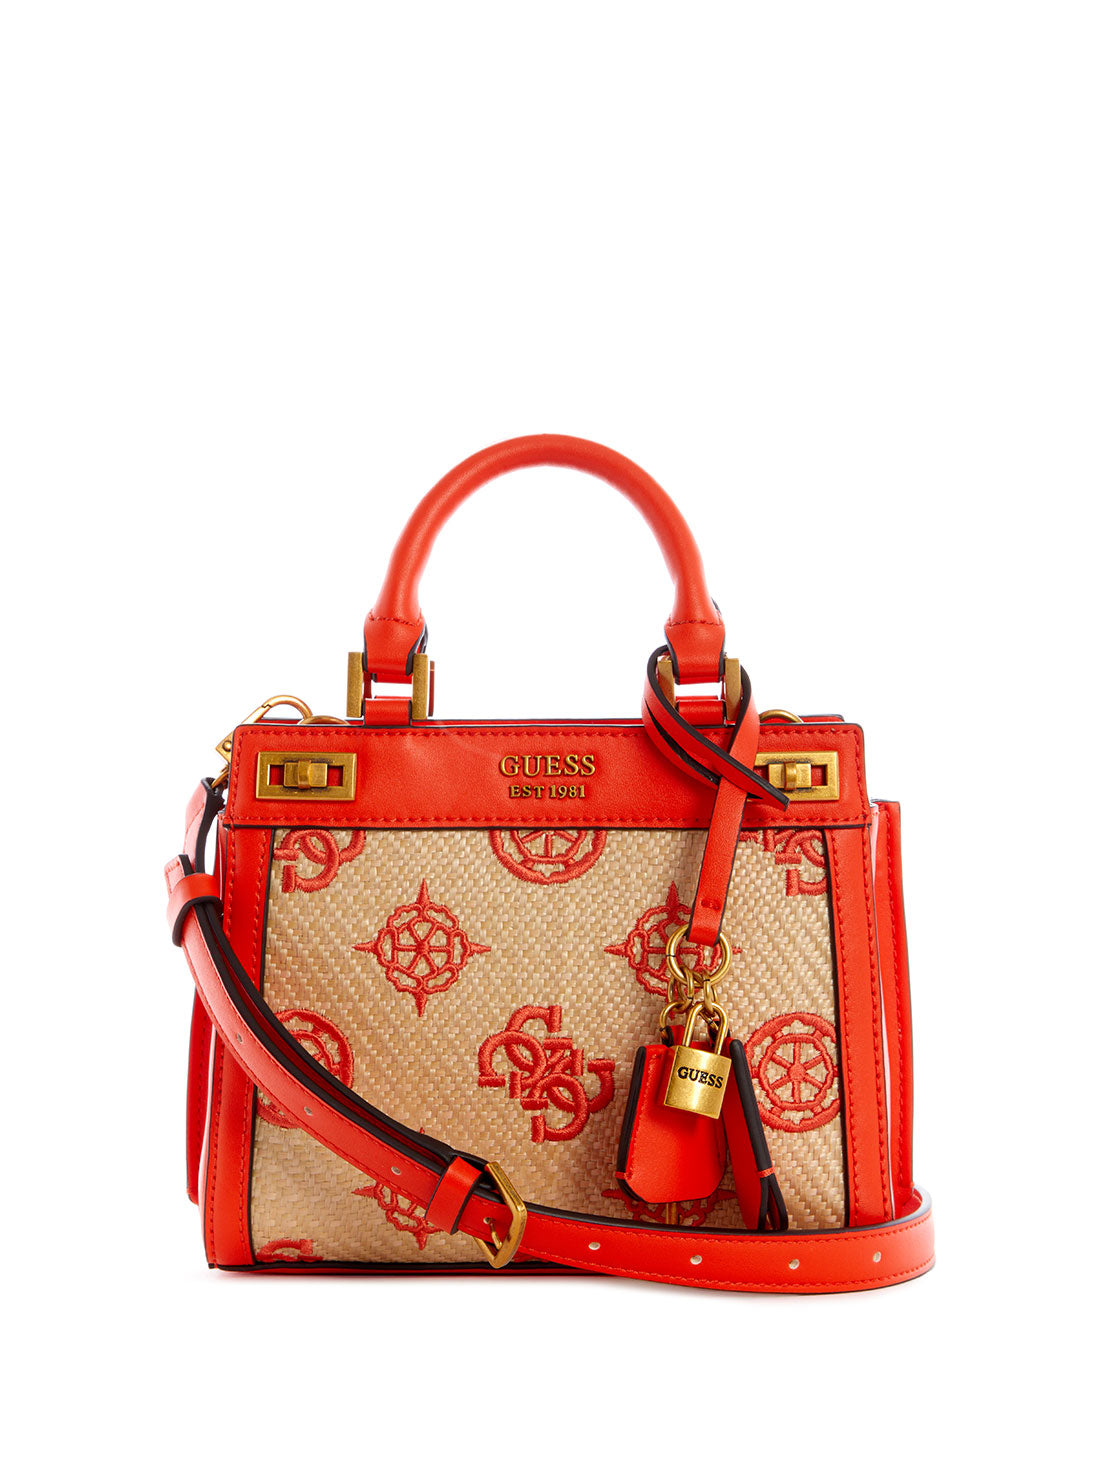 GUESS Women's Red Katey Mini Raffia Satchel Bag RB787073 Front View